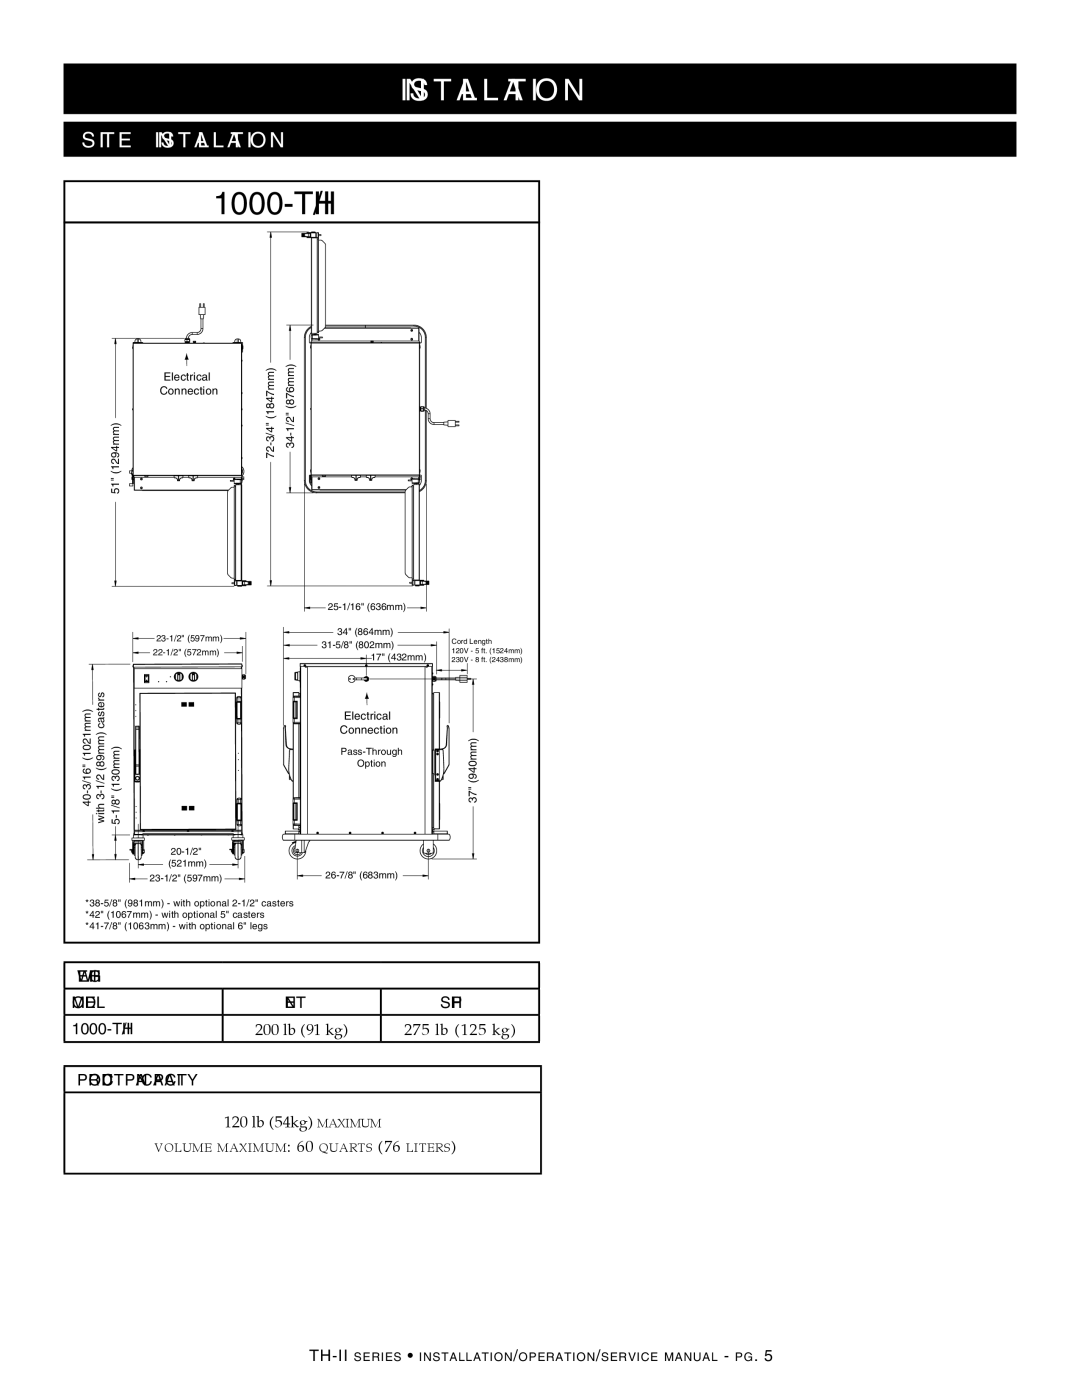 Alto-Shaam 750-TH-II manual 1000-TH/II 